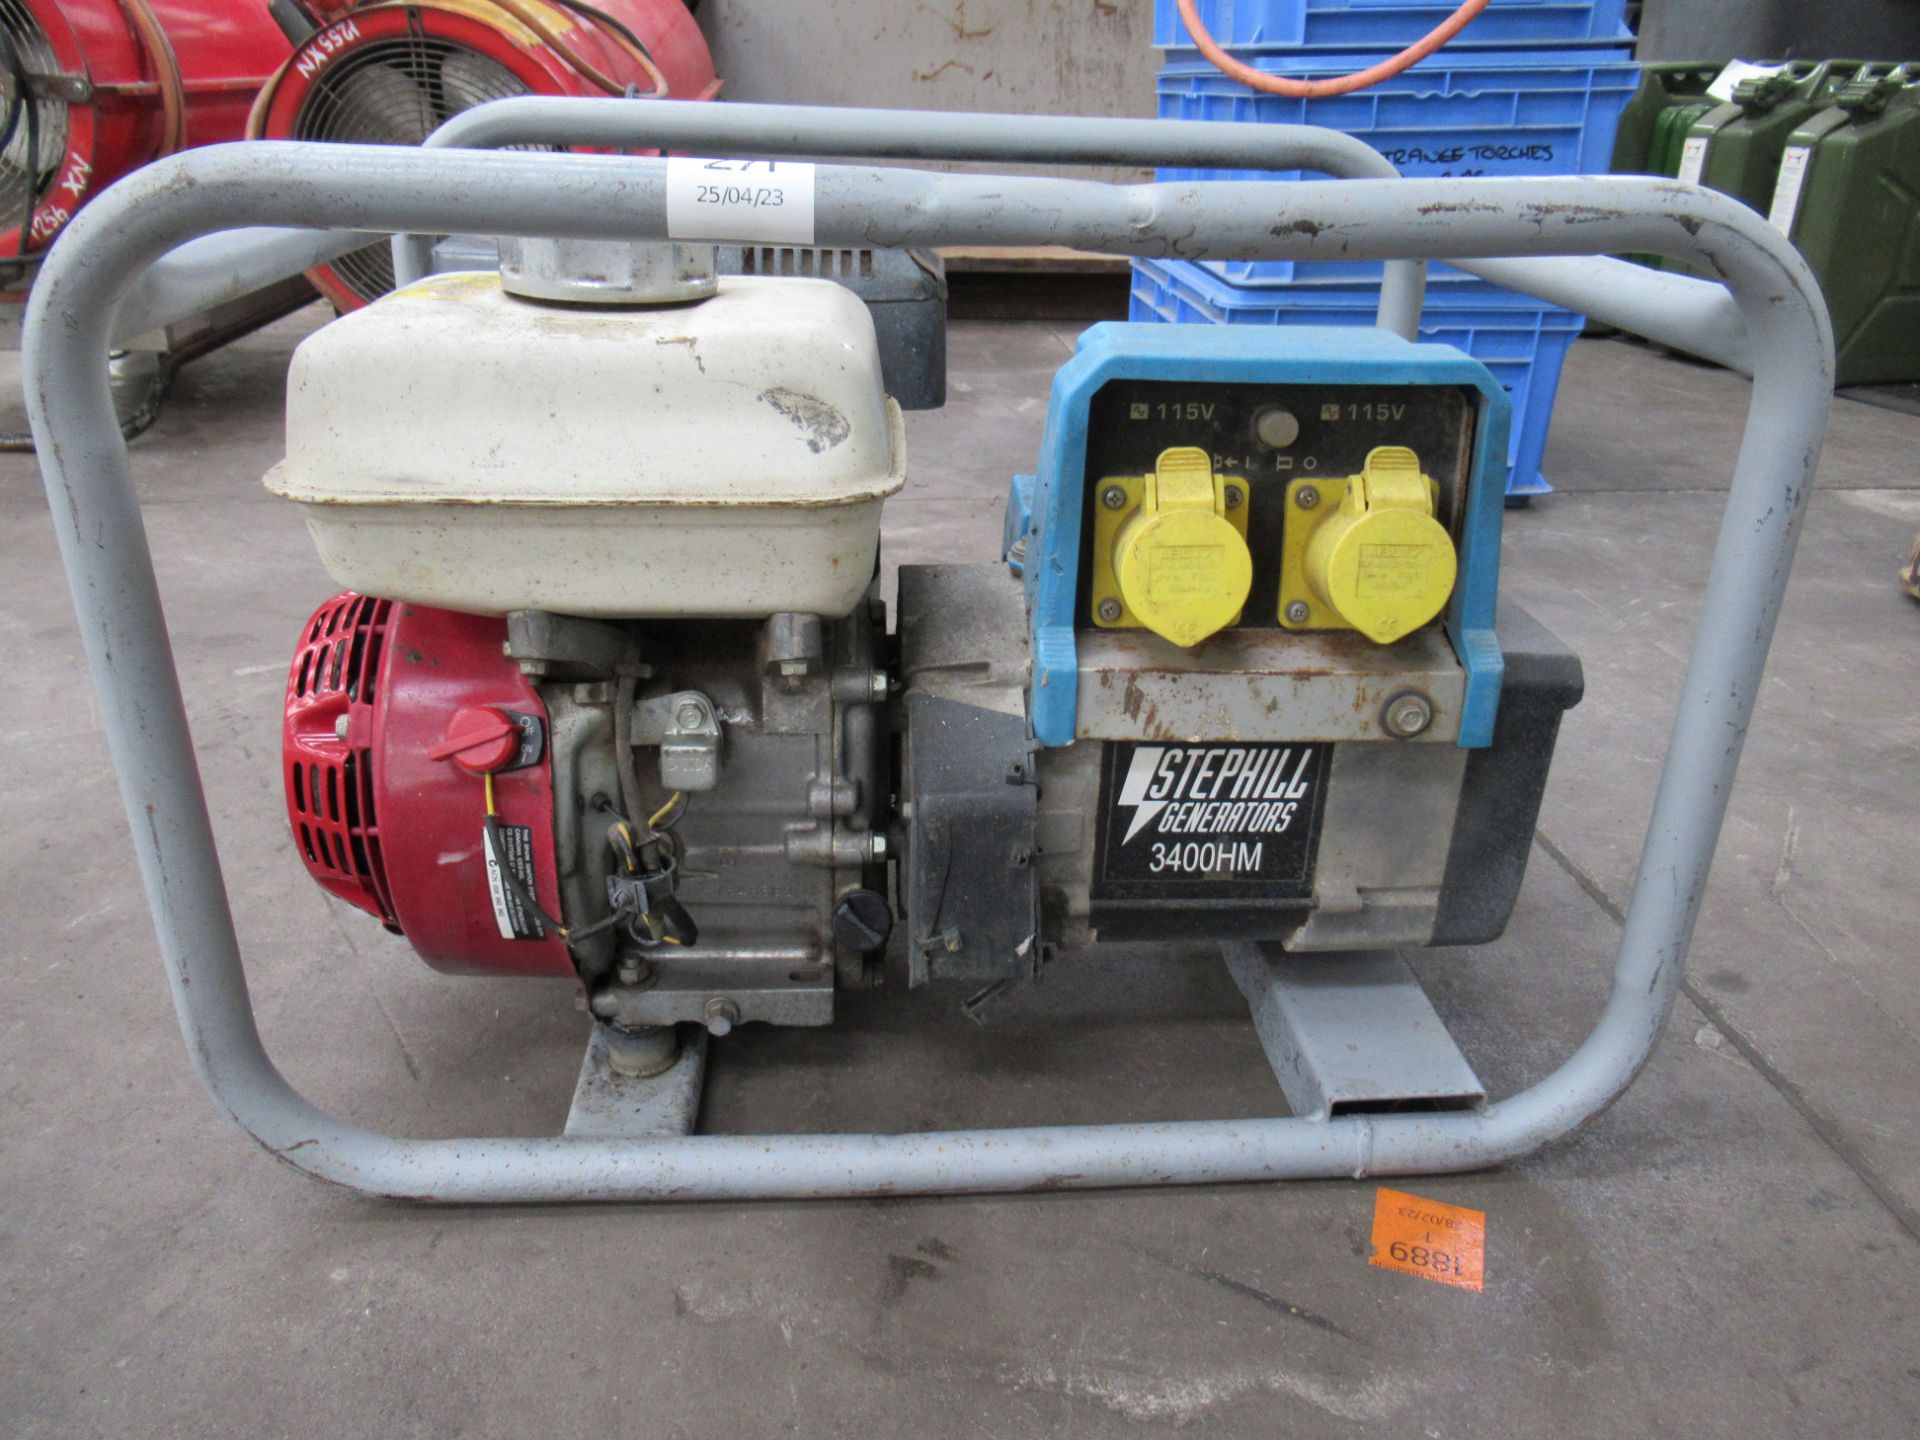 A Stephill 3400HM 110V Generator